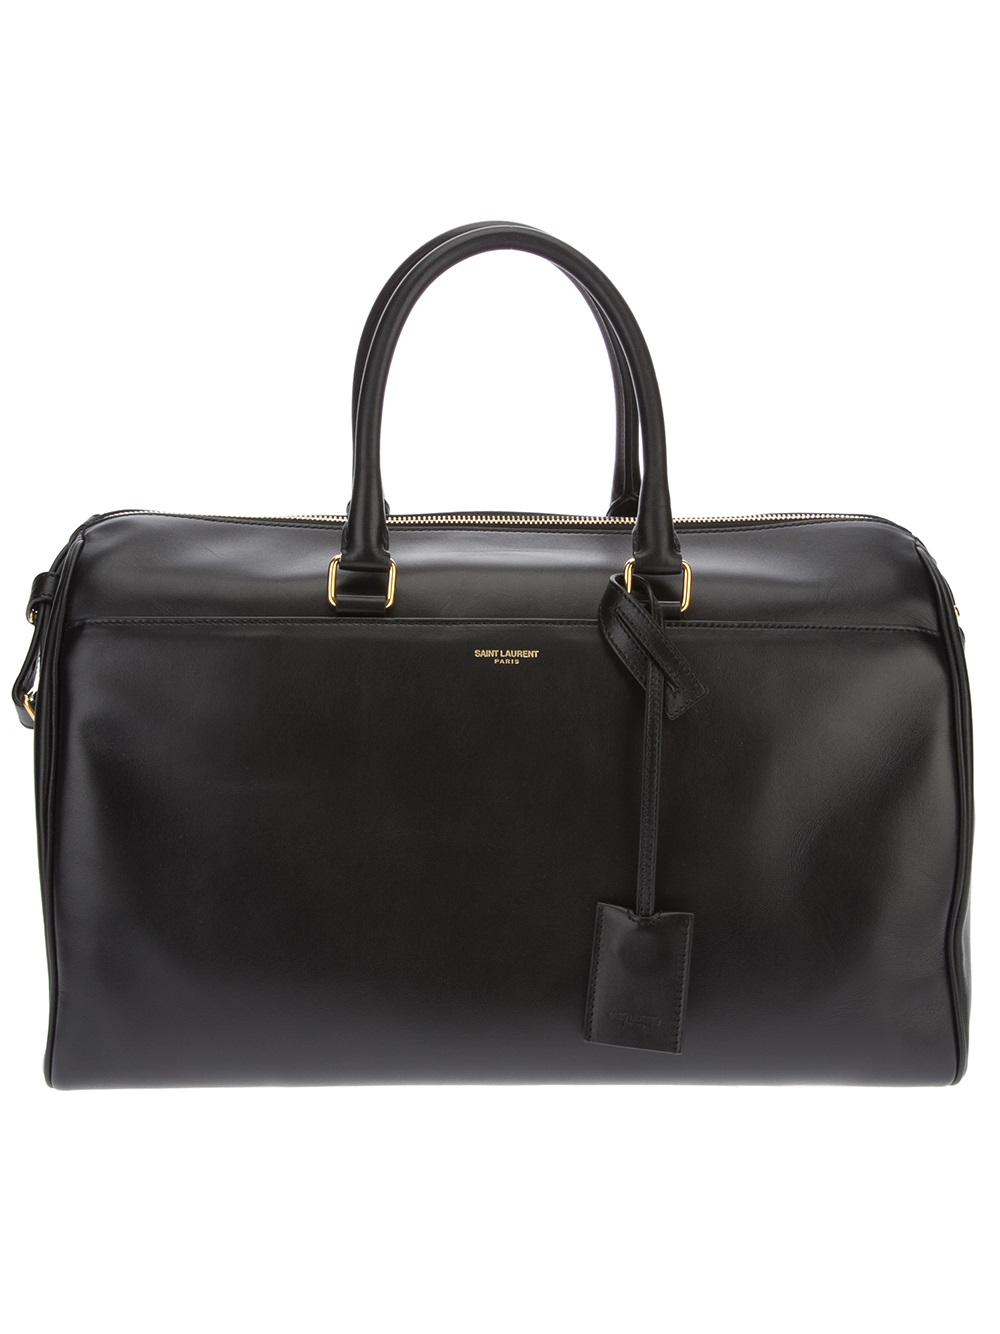 Saint Laurent Large Duffle Bag in Black | Lyst